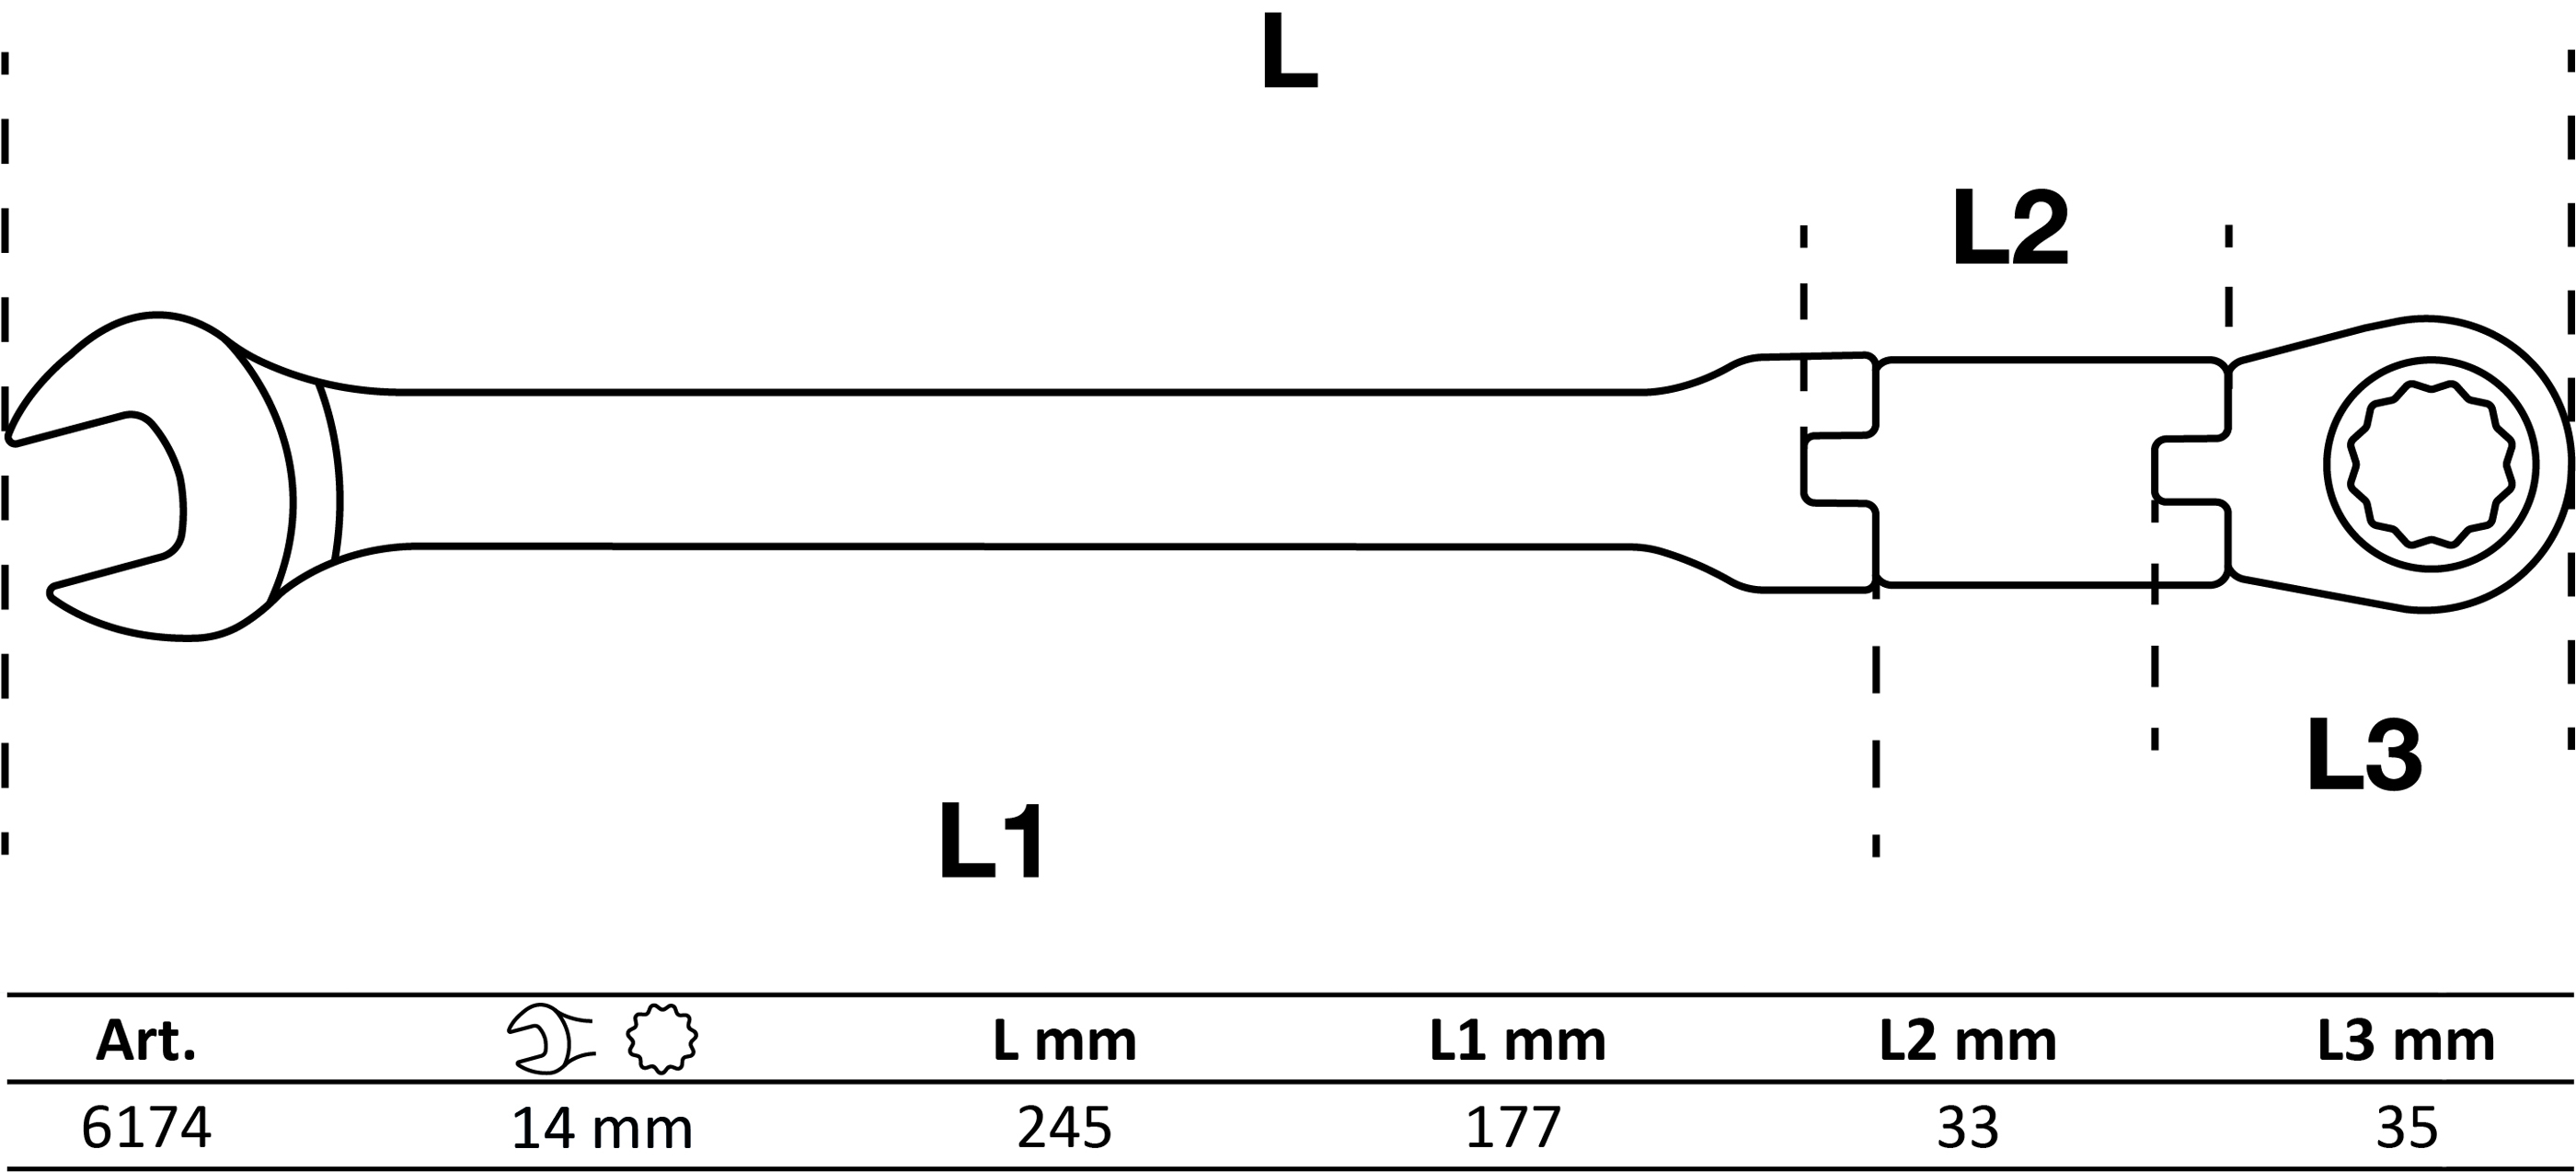 BGS Doppelgelenk-Ratschenring-Maulschlüssel | abwinkelbar | SW 14 mm